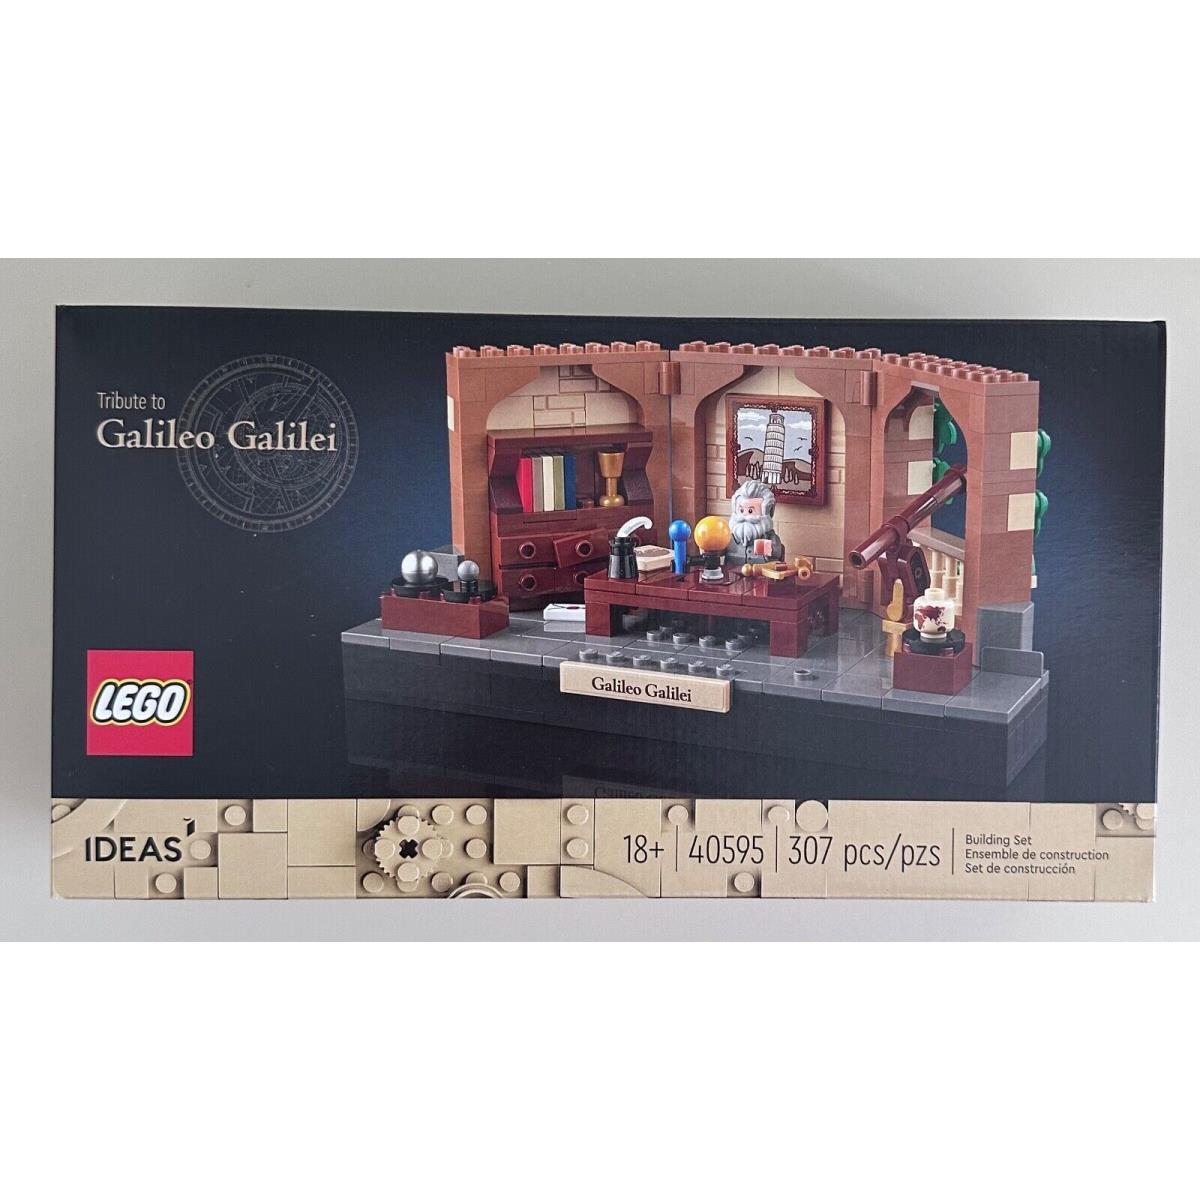 Lego Ideas 40595 Tribute to Galileo Galilei Building Set Toy 307 Pieces